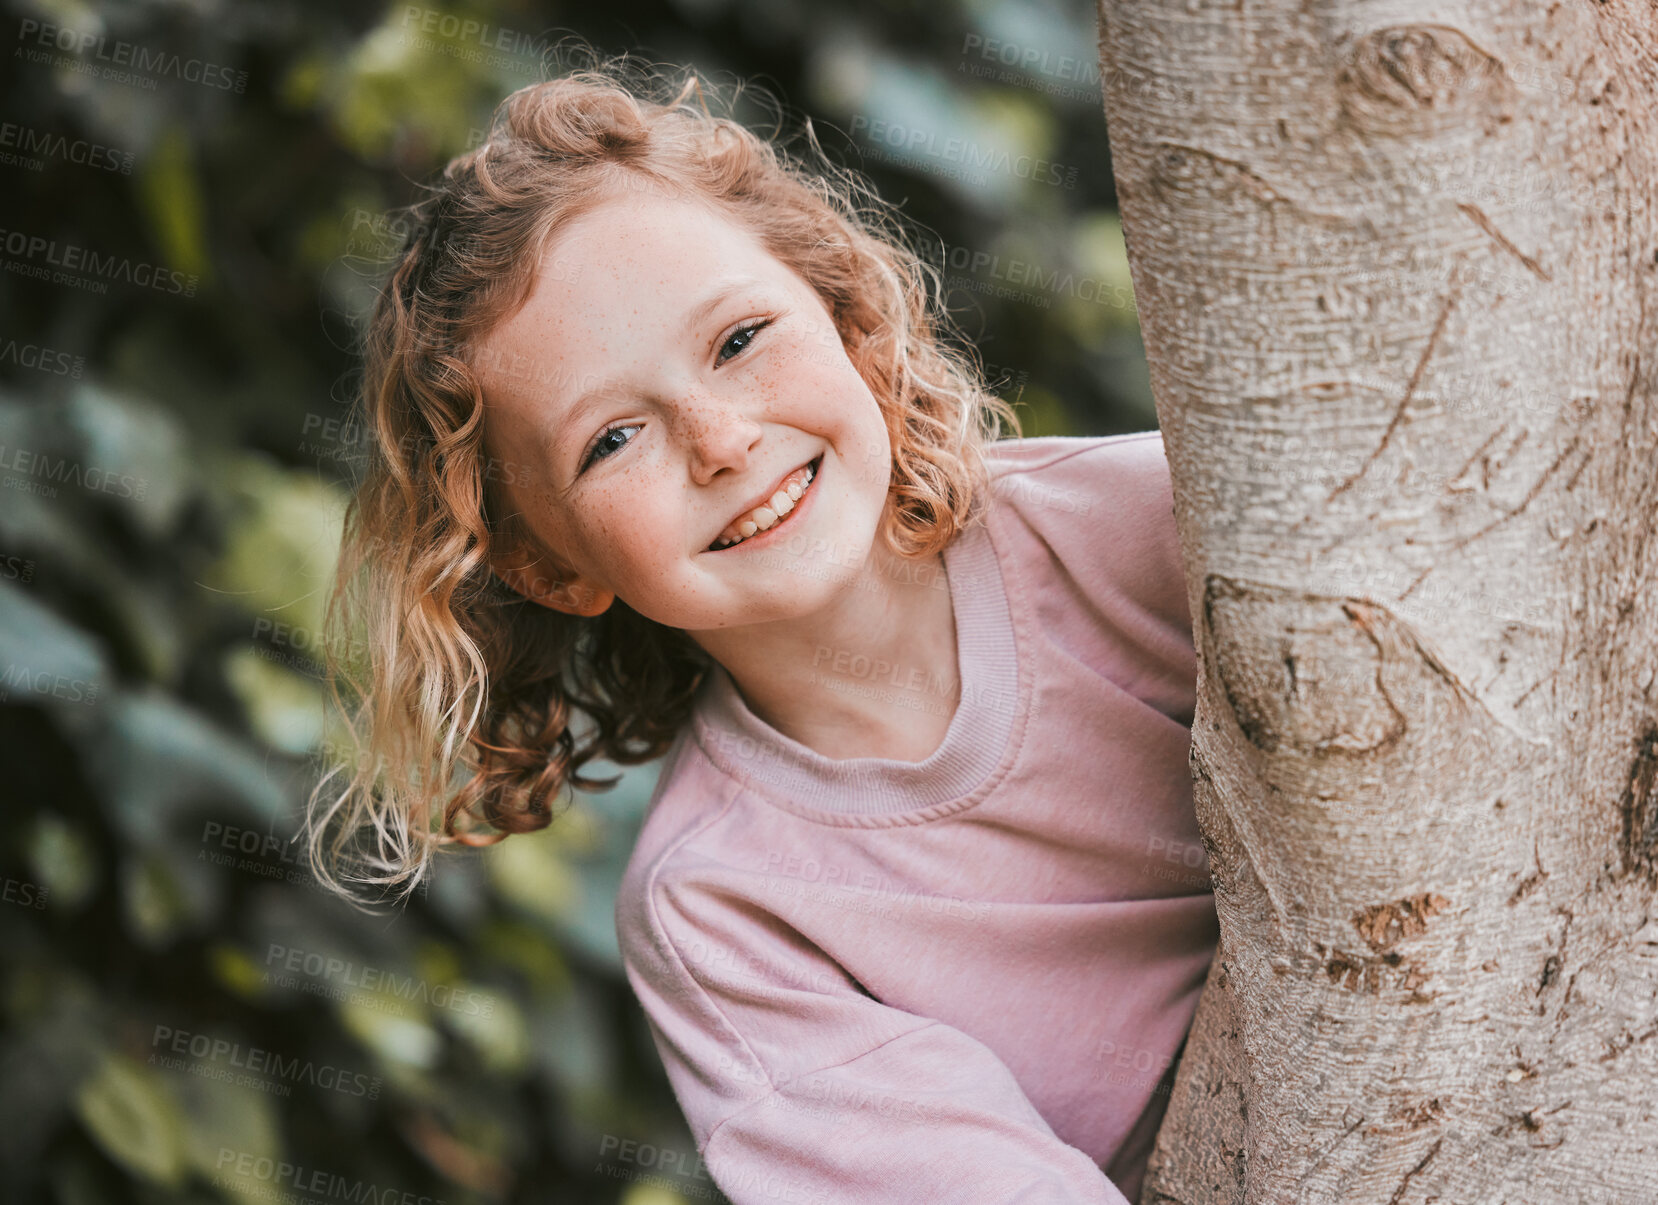 Buy stock photo Shot of an adorable little girl hugging a tree in a garden